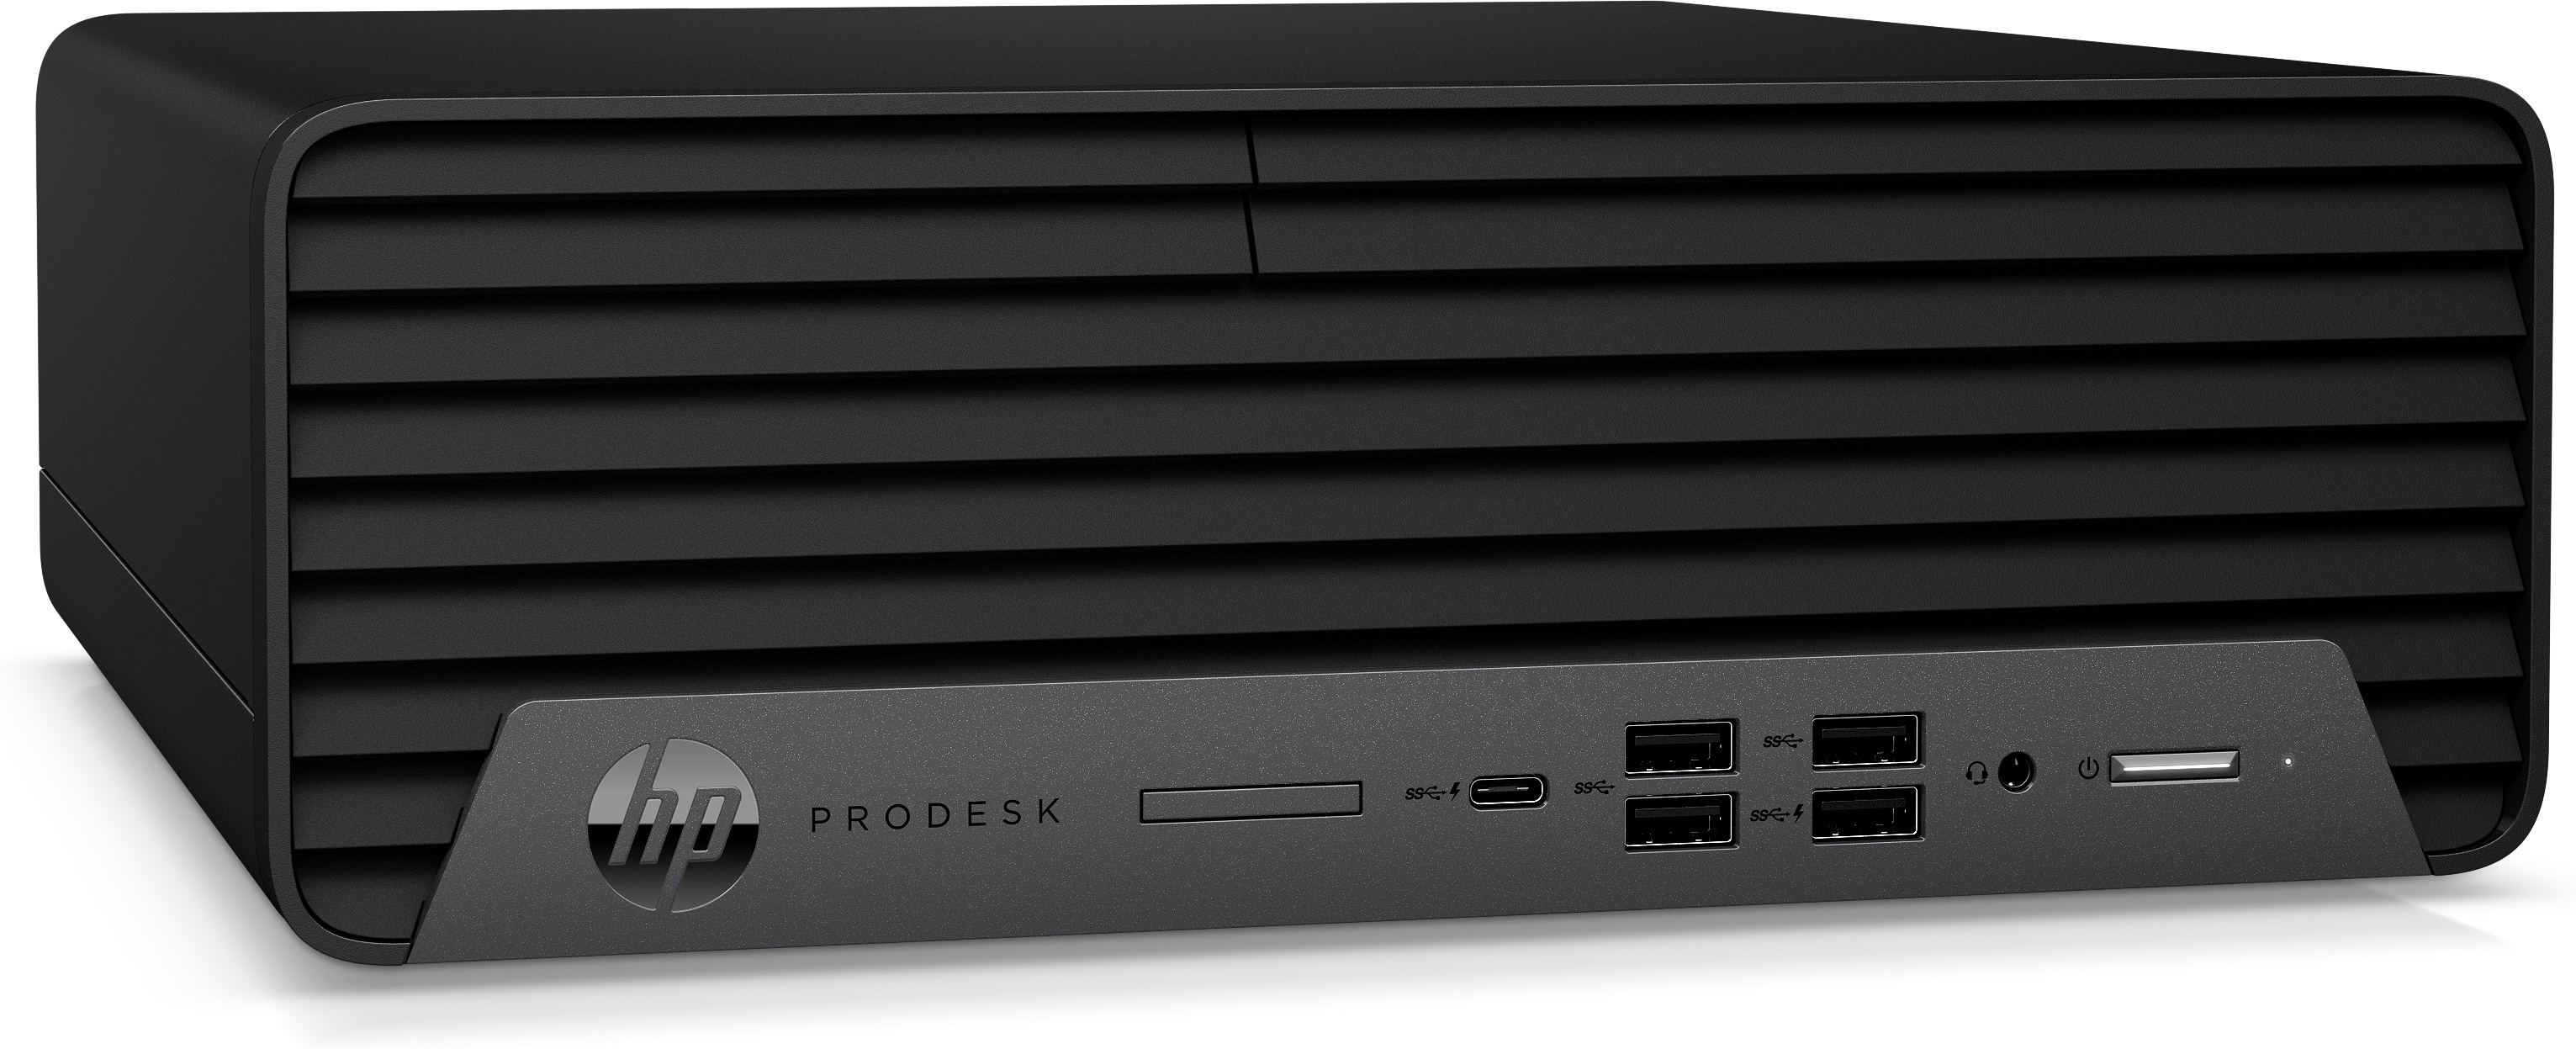 HP ProDesk 600 G6 SFF Desktop PC i5-10500 8GB RAM 256GB SSD W10P